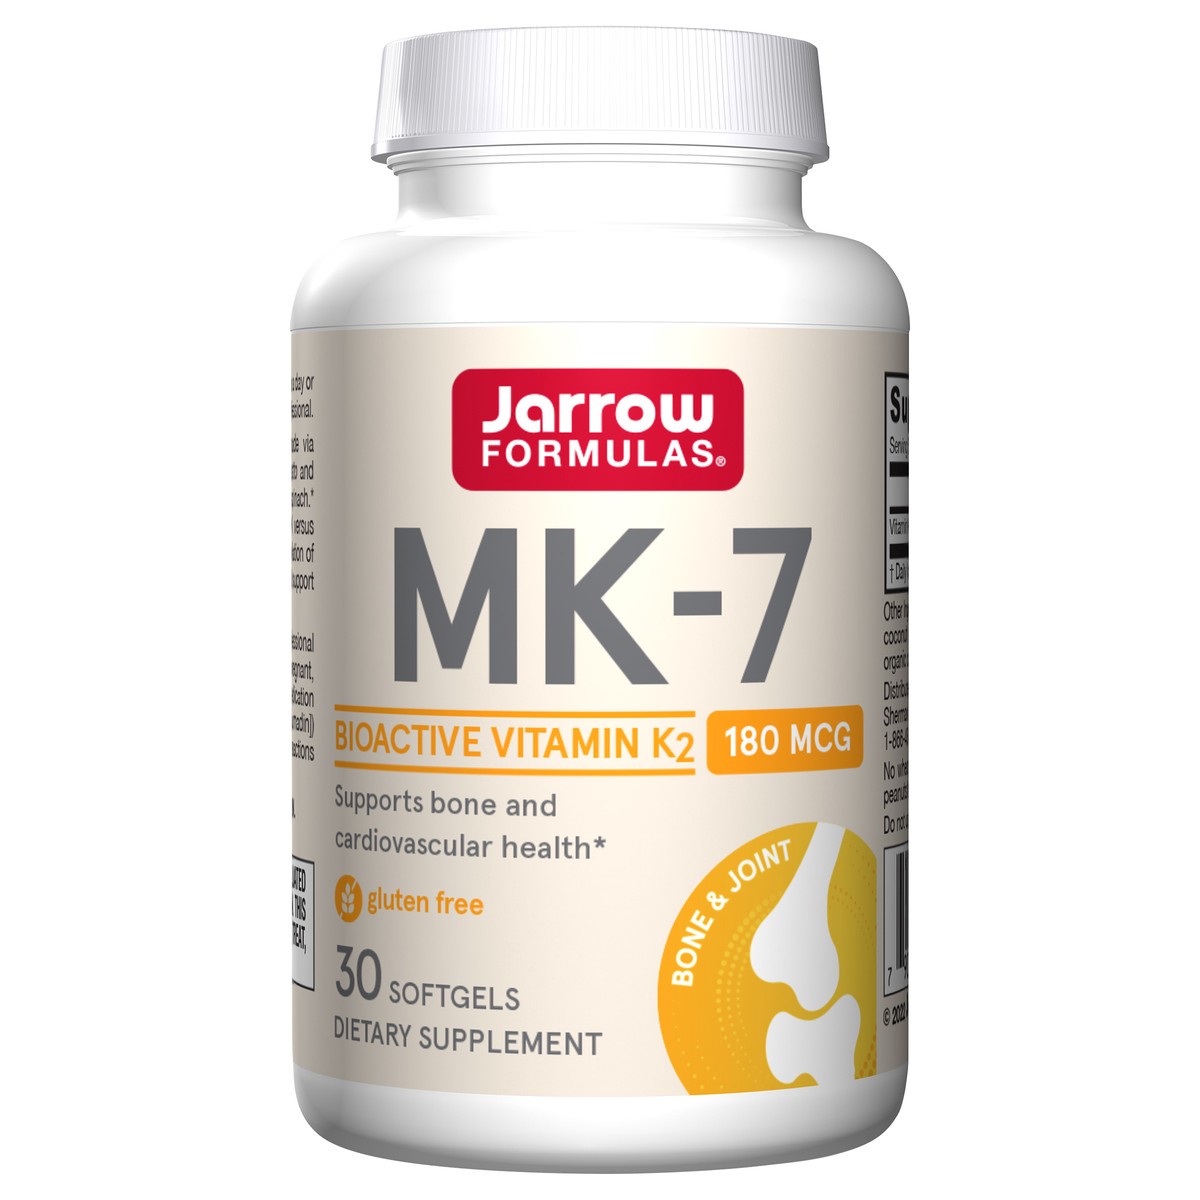 slide 4 of 4, Jarrow Formulas MK-7 180 mcg - Bioactive Form of Vitamin K2 - 30 Servings (Softgels) - Support to Build Strong Bones & Cardiovascular Health - Dietary Supplement - Gluten Free, 30 ct